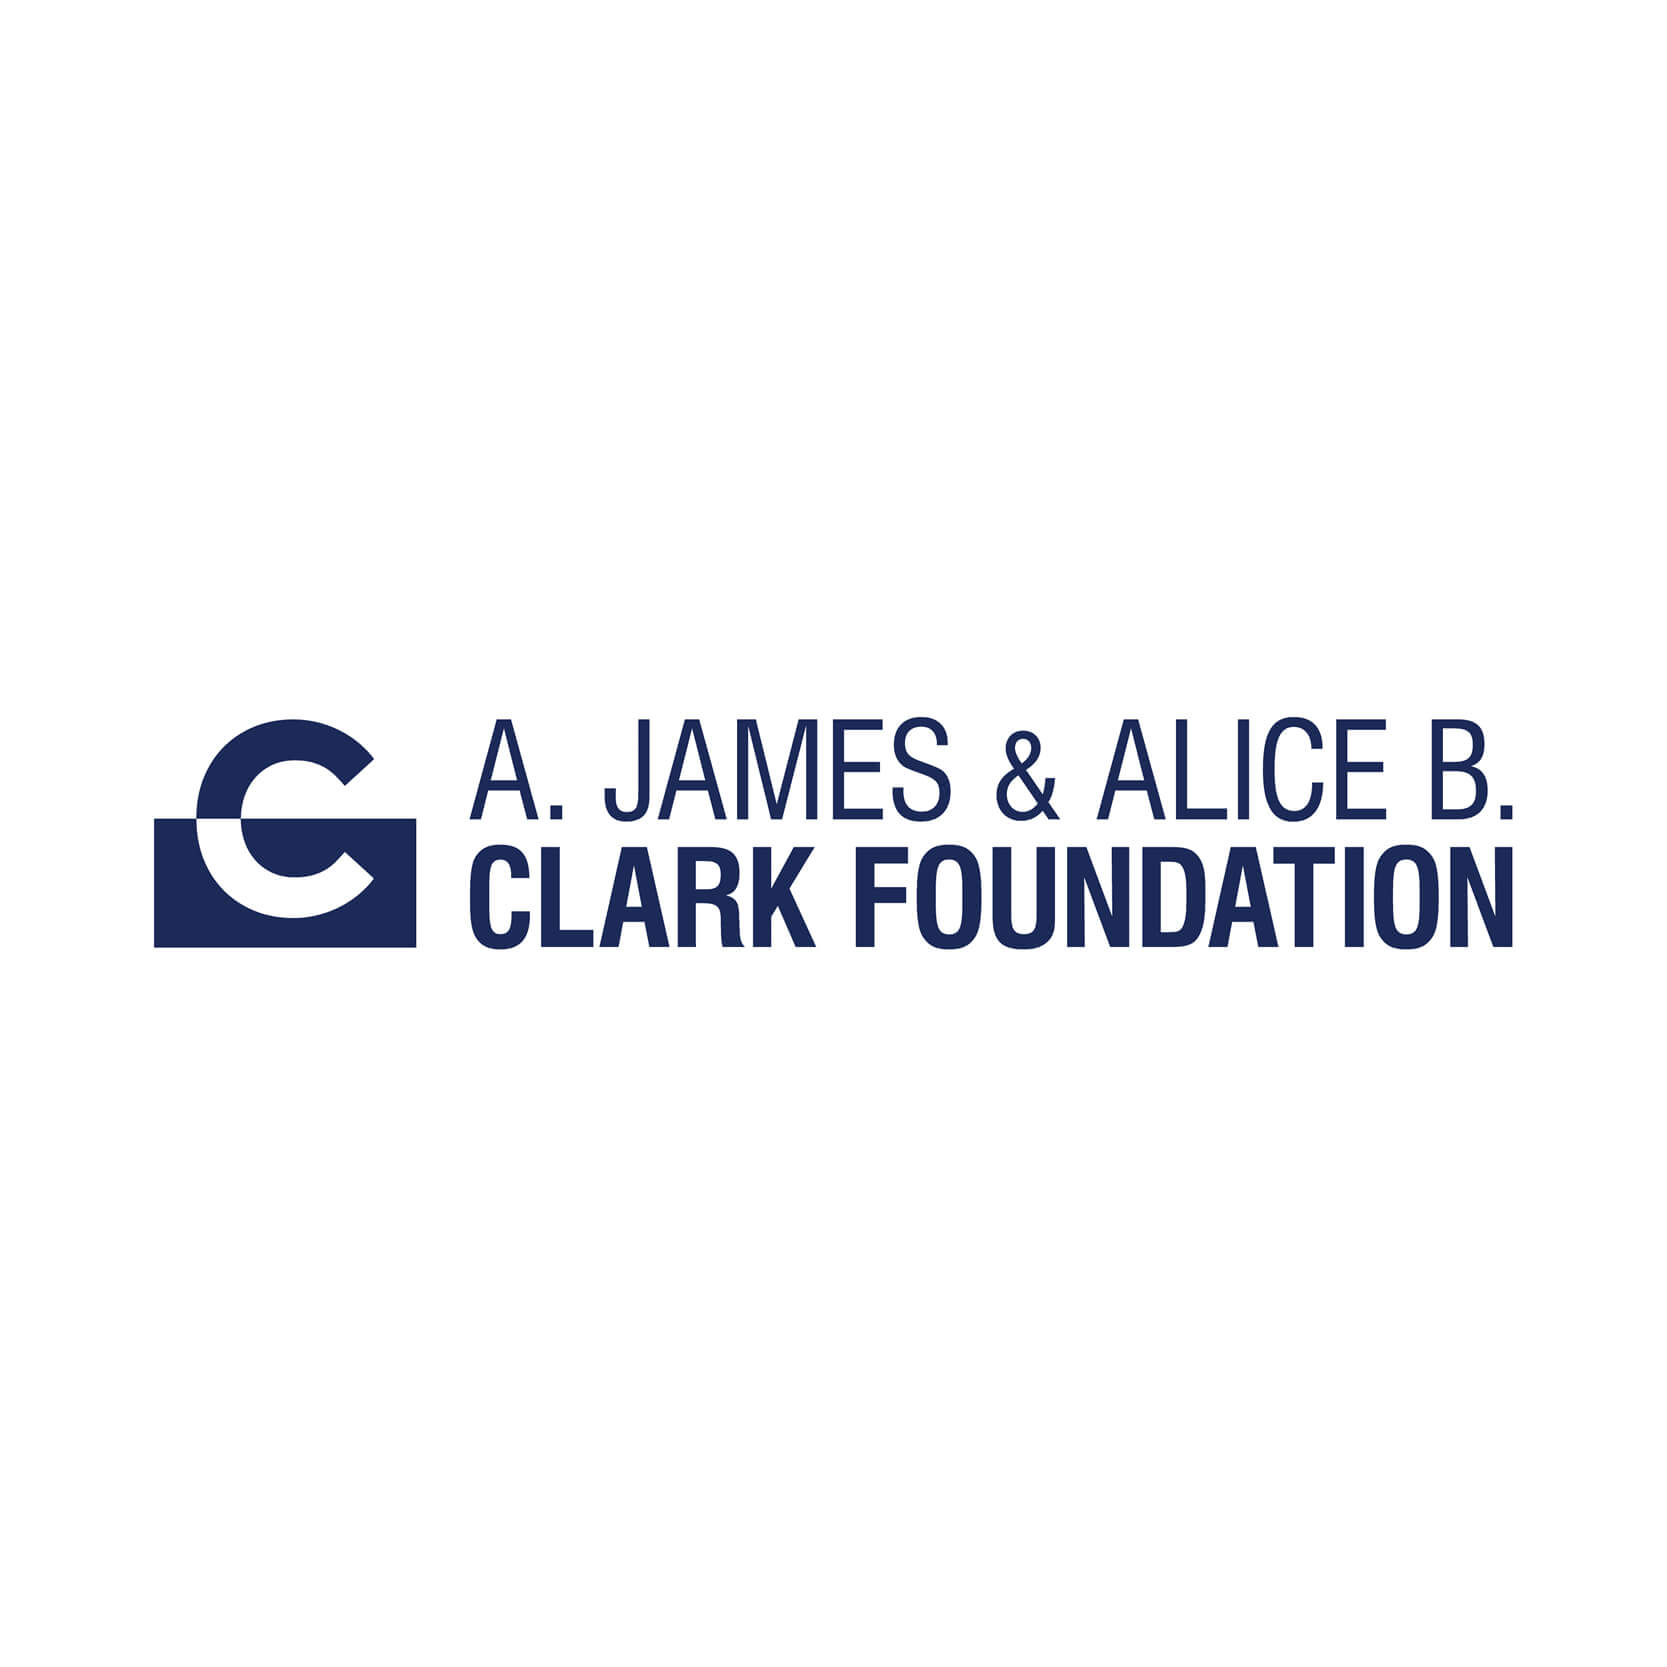 A. James & Alice B. Clark Foundation